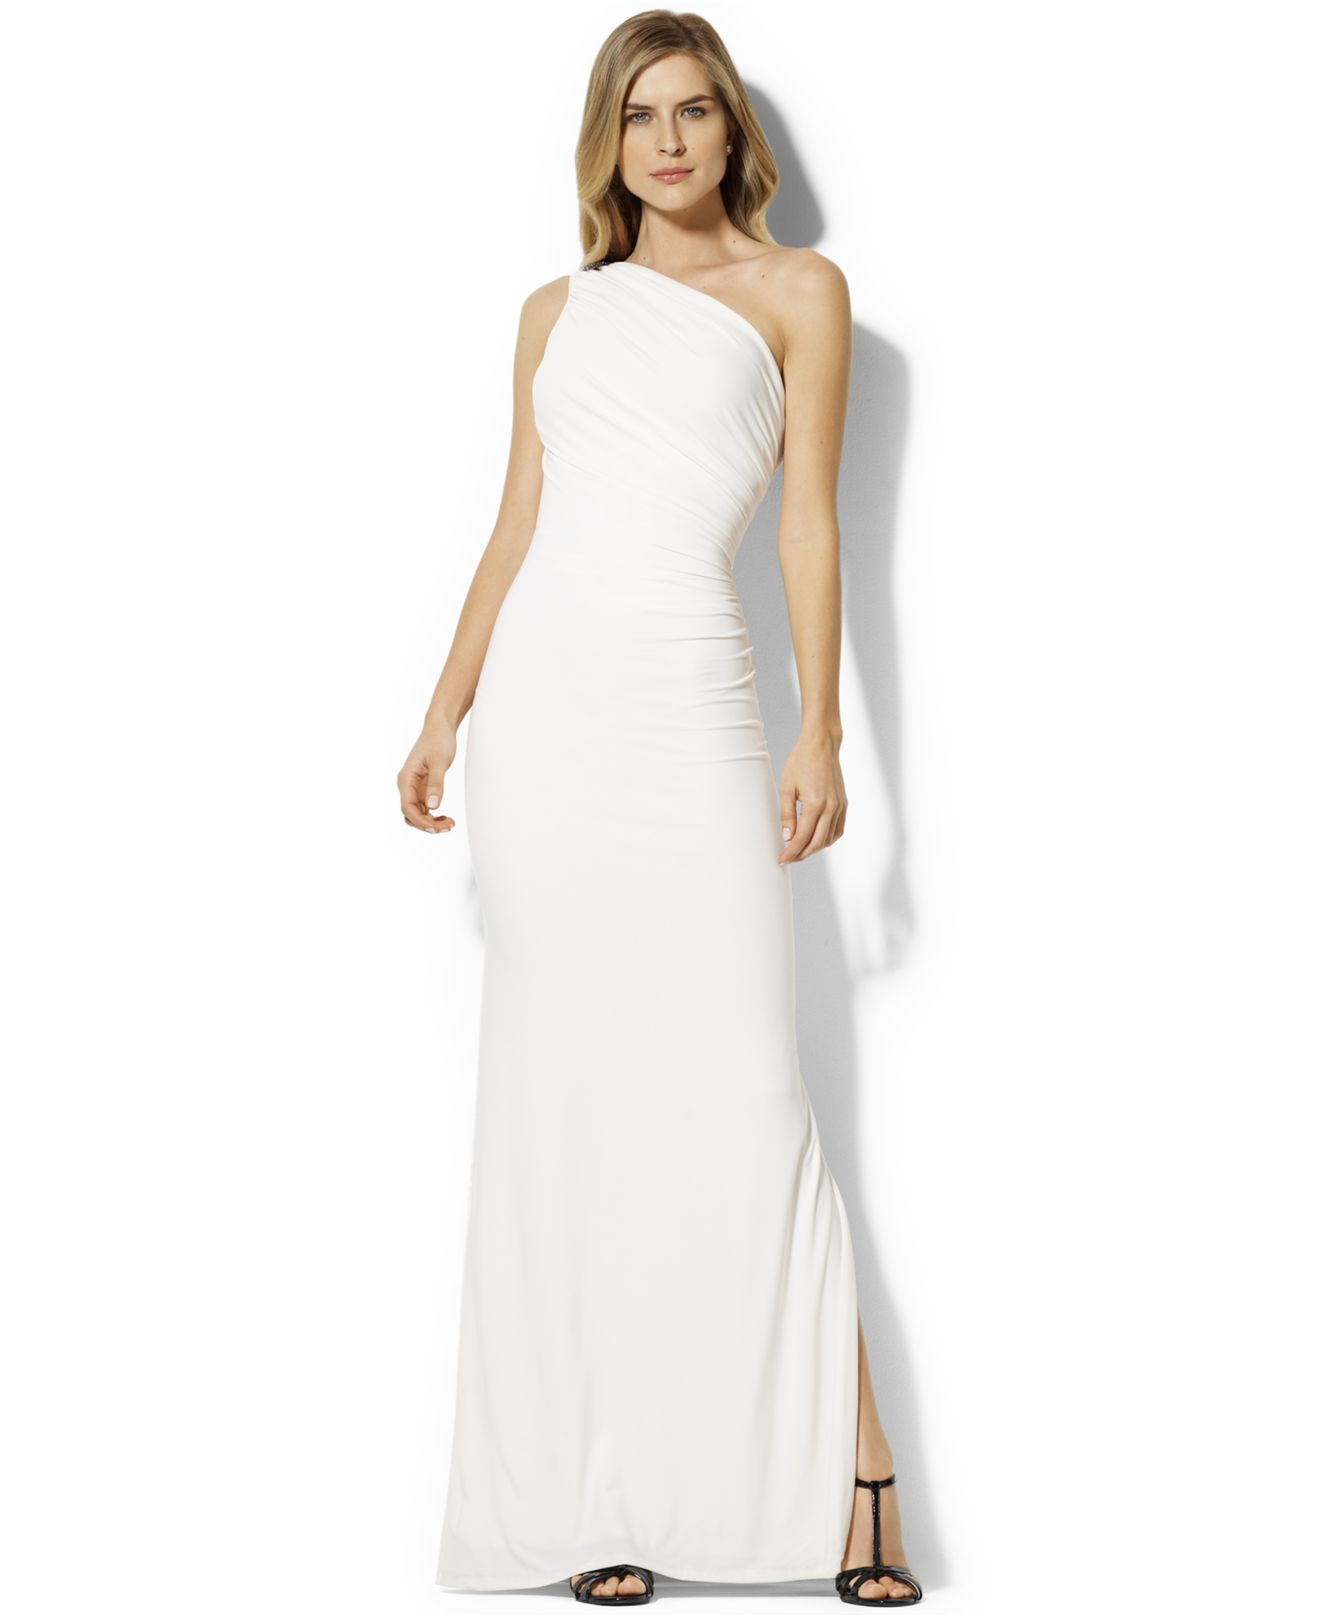 Lauren by Ralph Lauren One-Shoulder Brooch Gown in White | Lyst